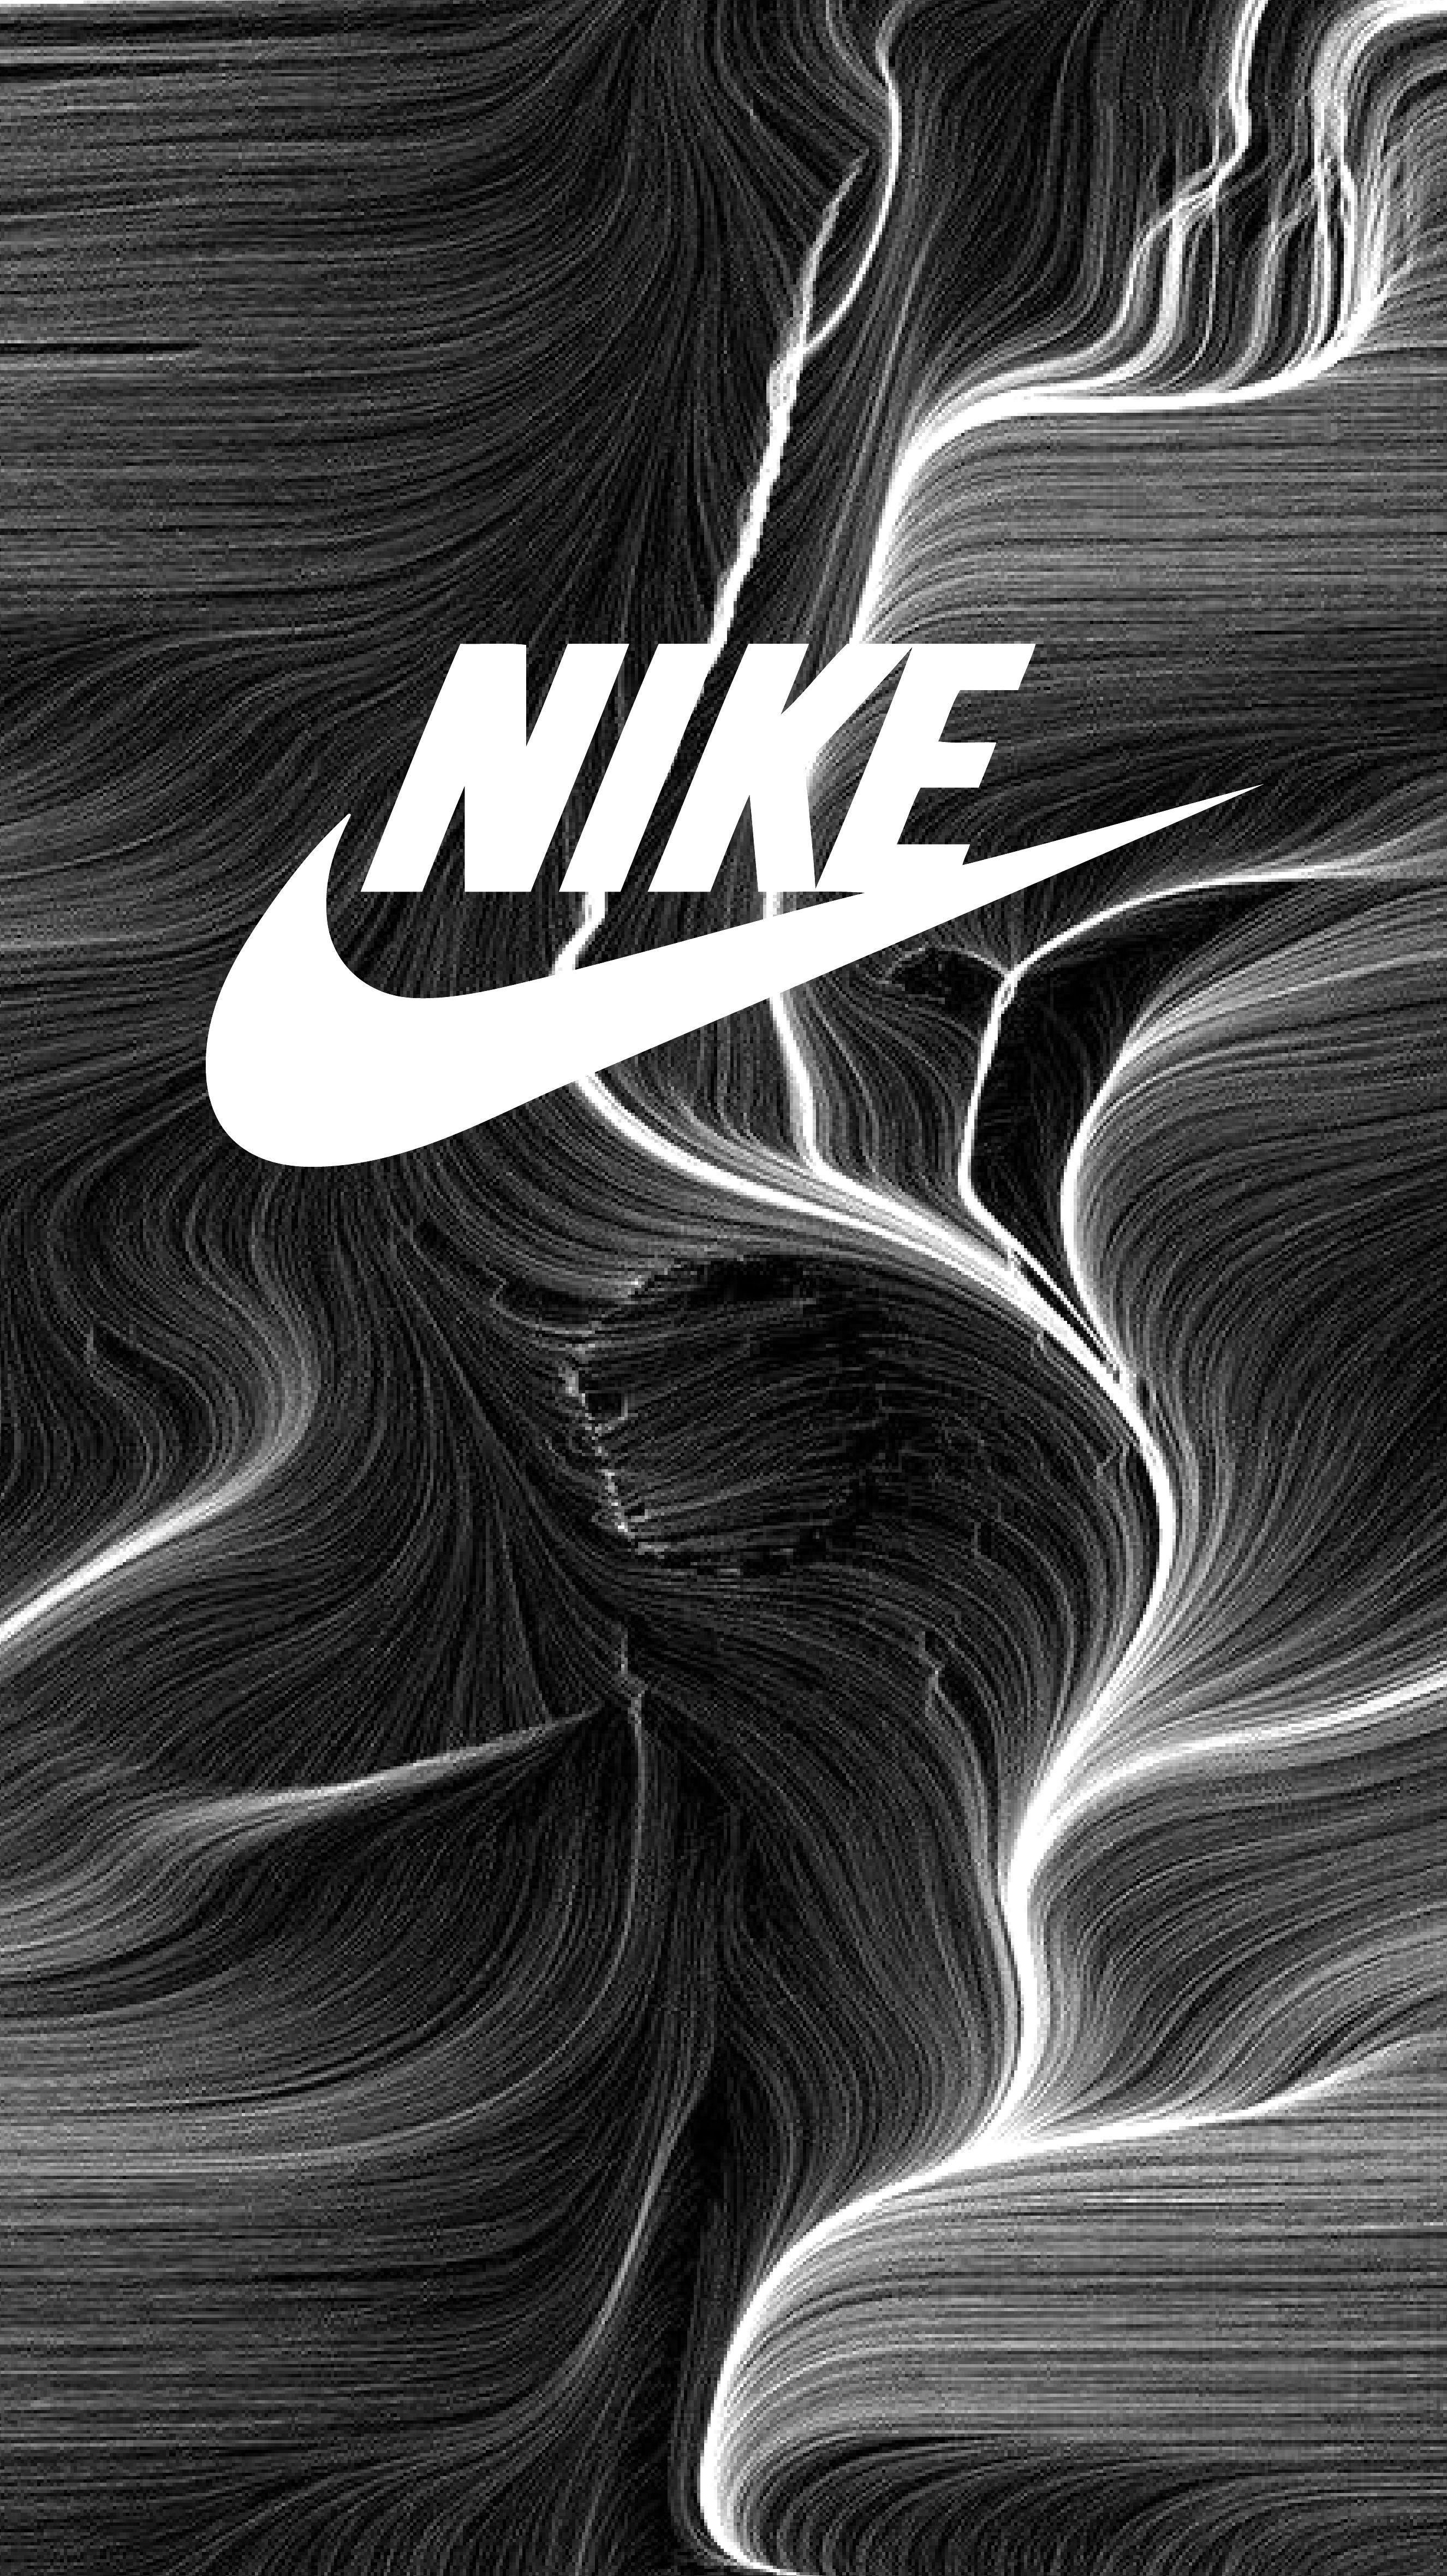 Dope Nike Logo - NIKE WALLPAPER 8. NIKE. Nike wallpaper, Nike, Nike wallpaper iphone